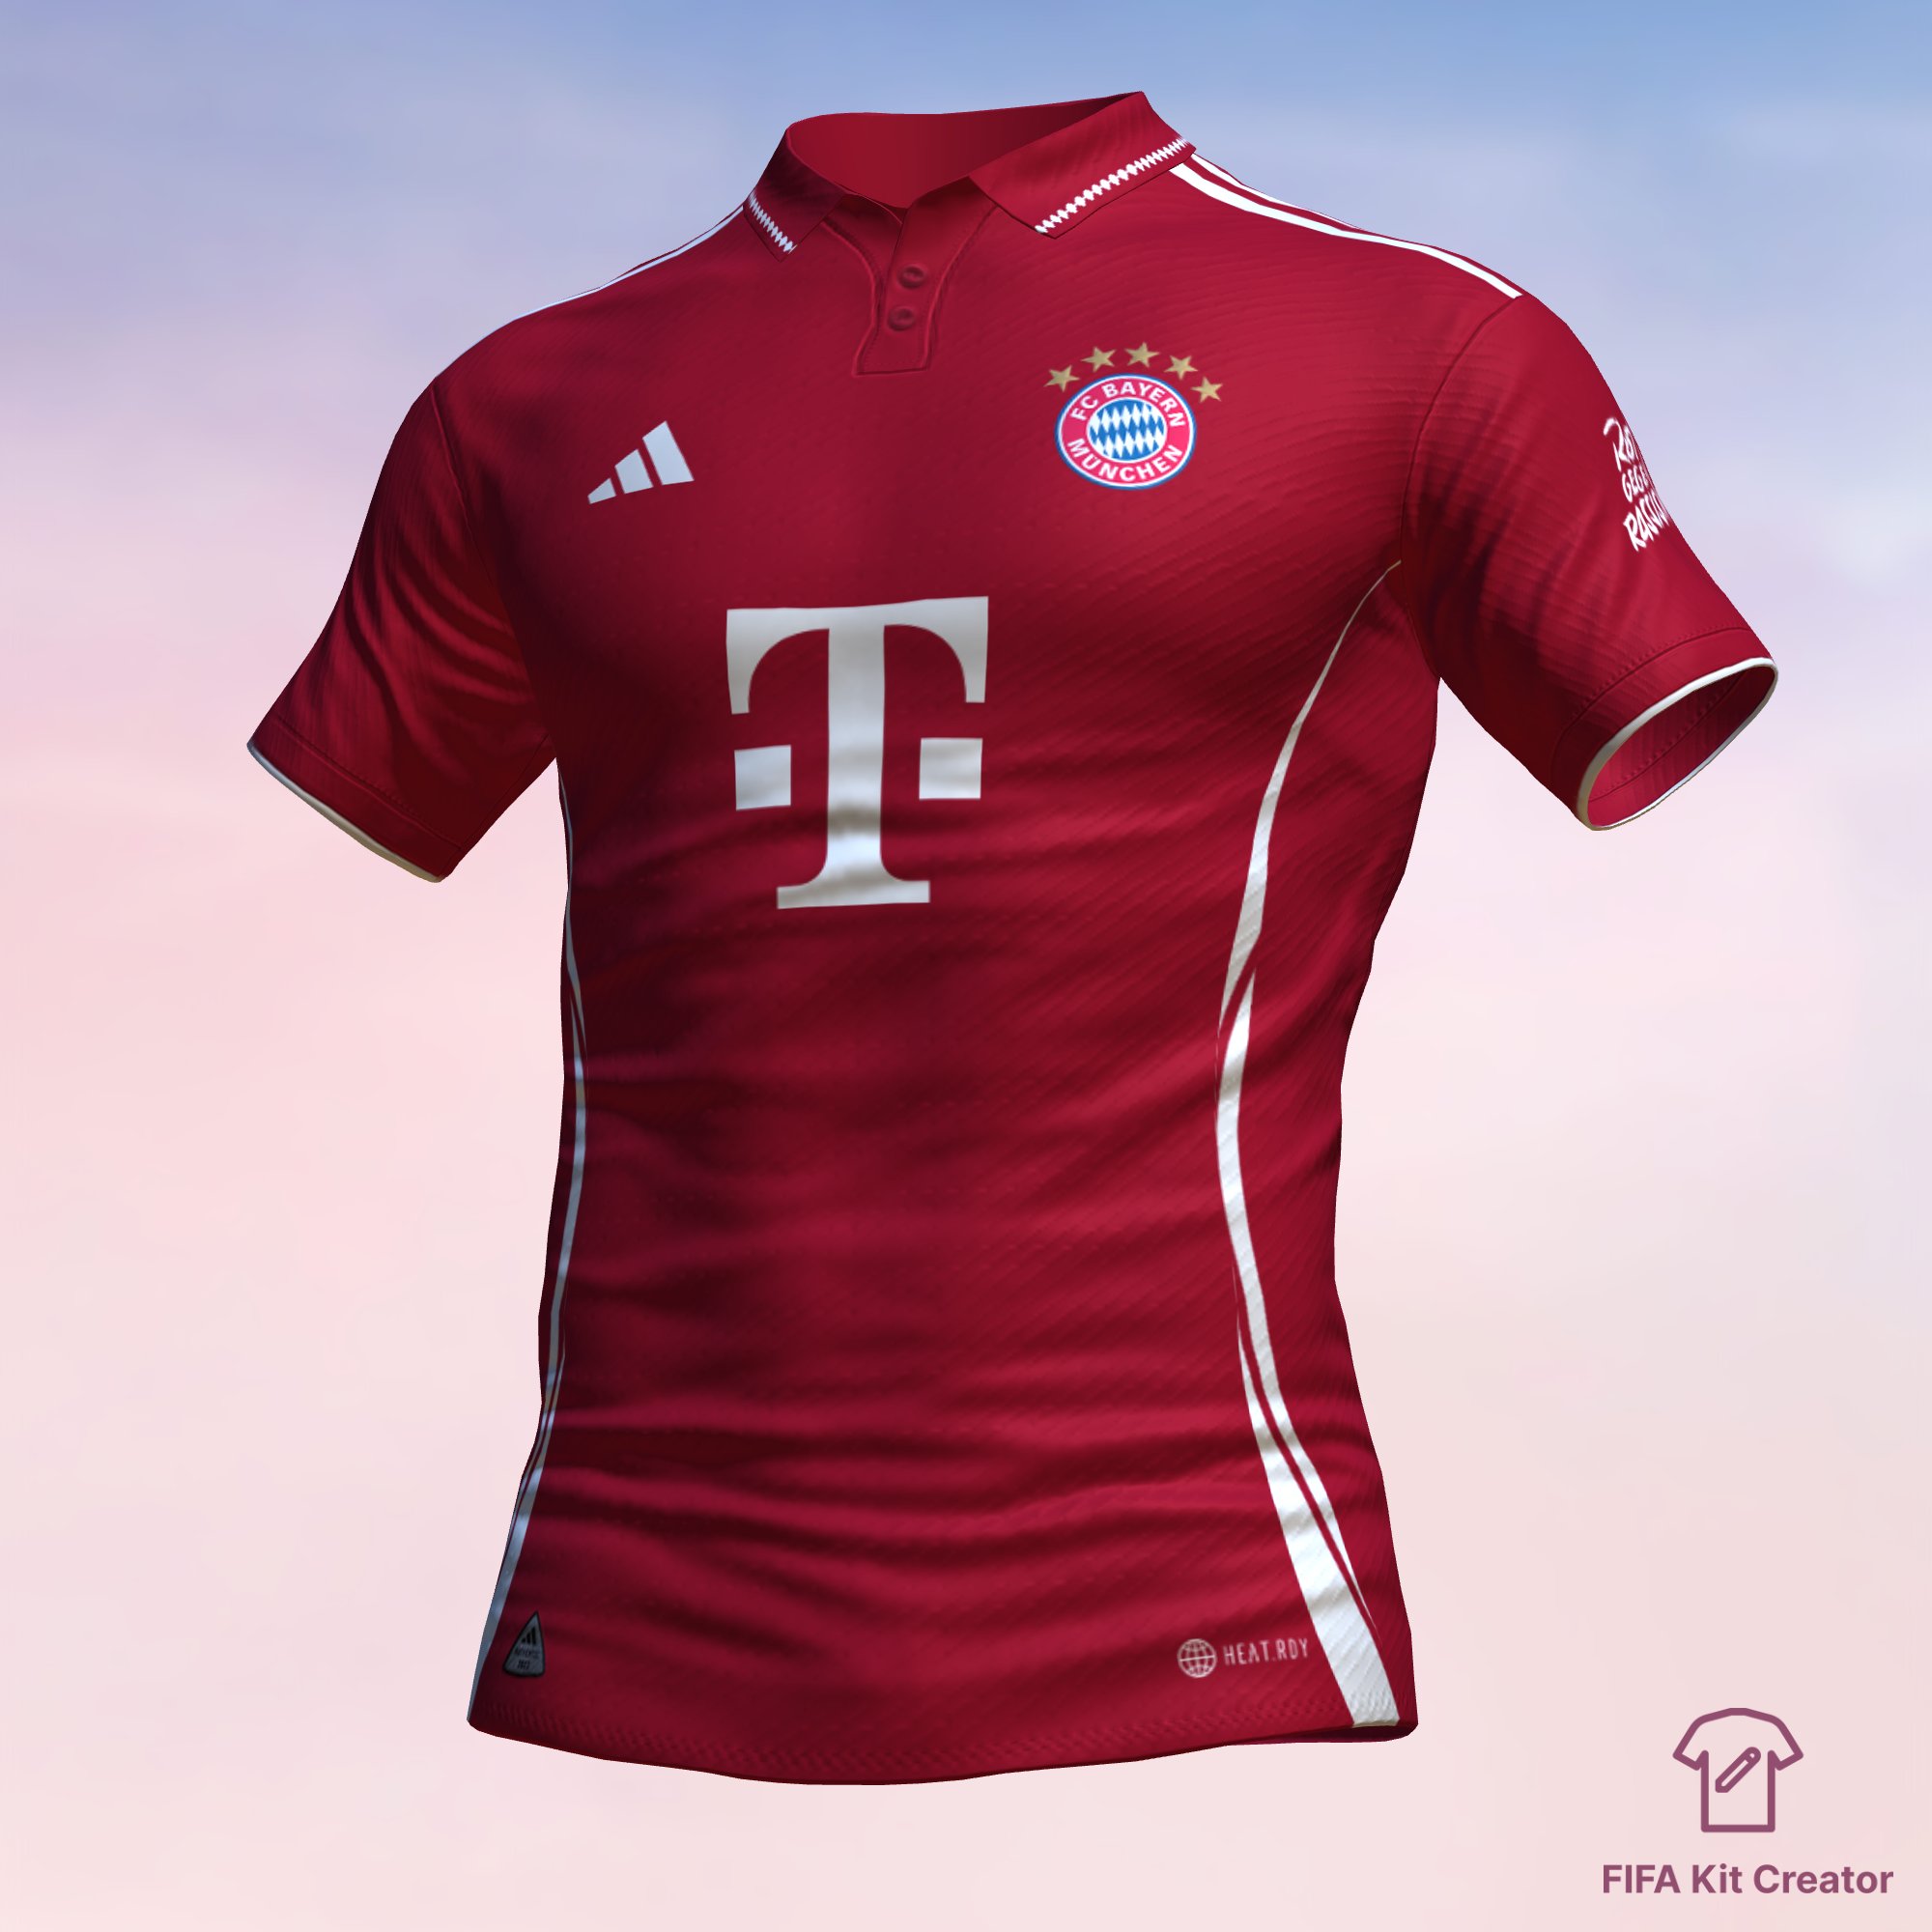 Adidas x 1860 Munich kit concept - FIFA Kit Creator Showcase